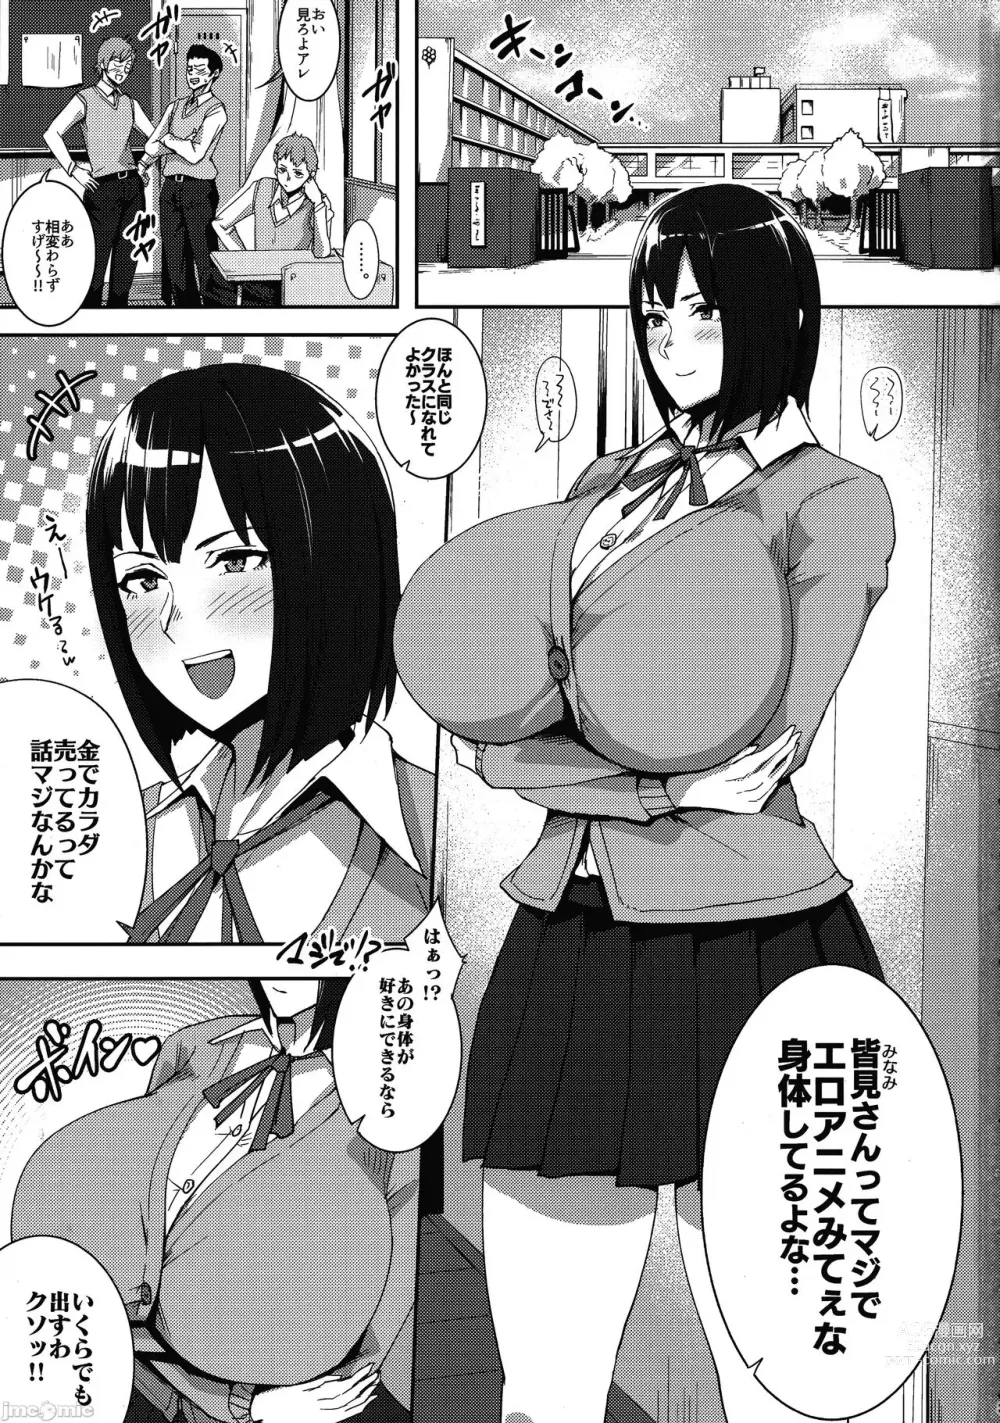 Page 2 of manga Minami-san Sensational